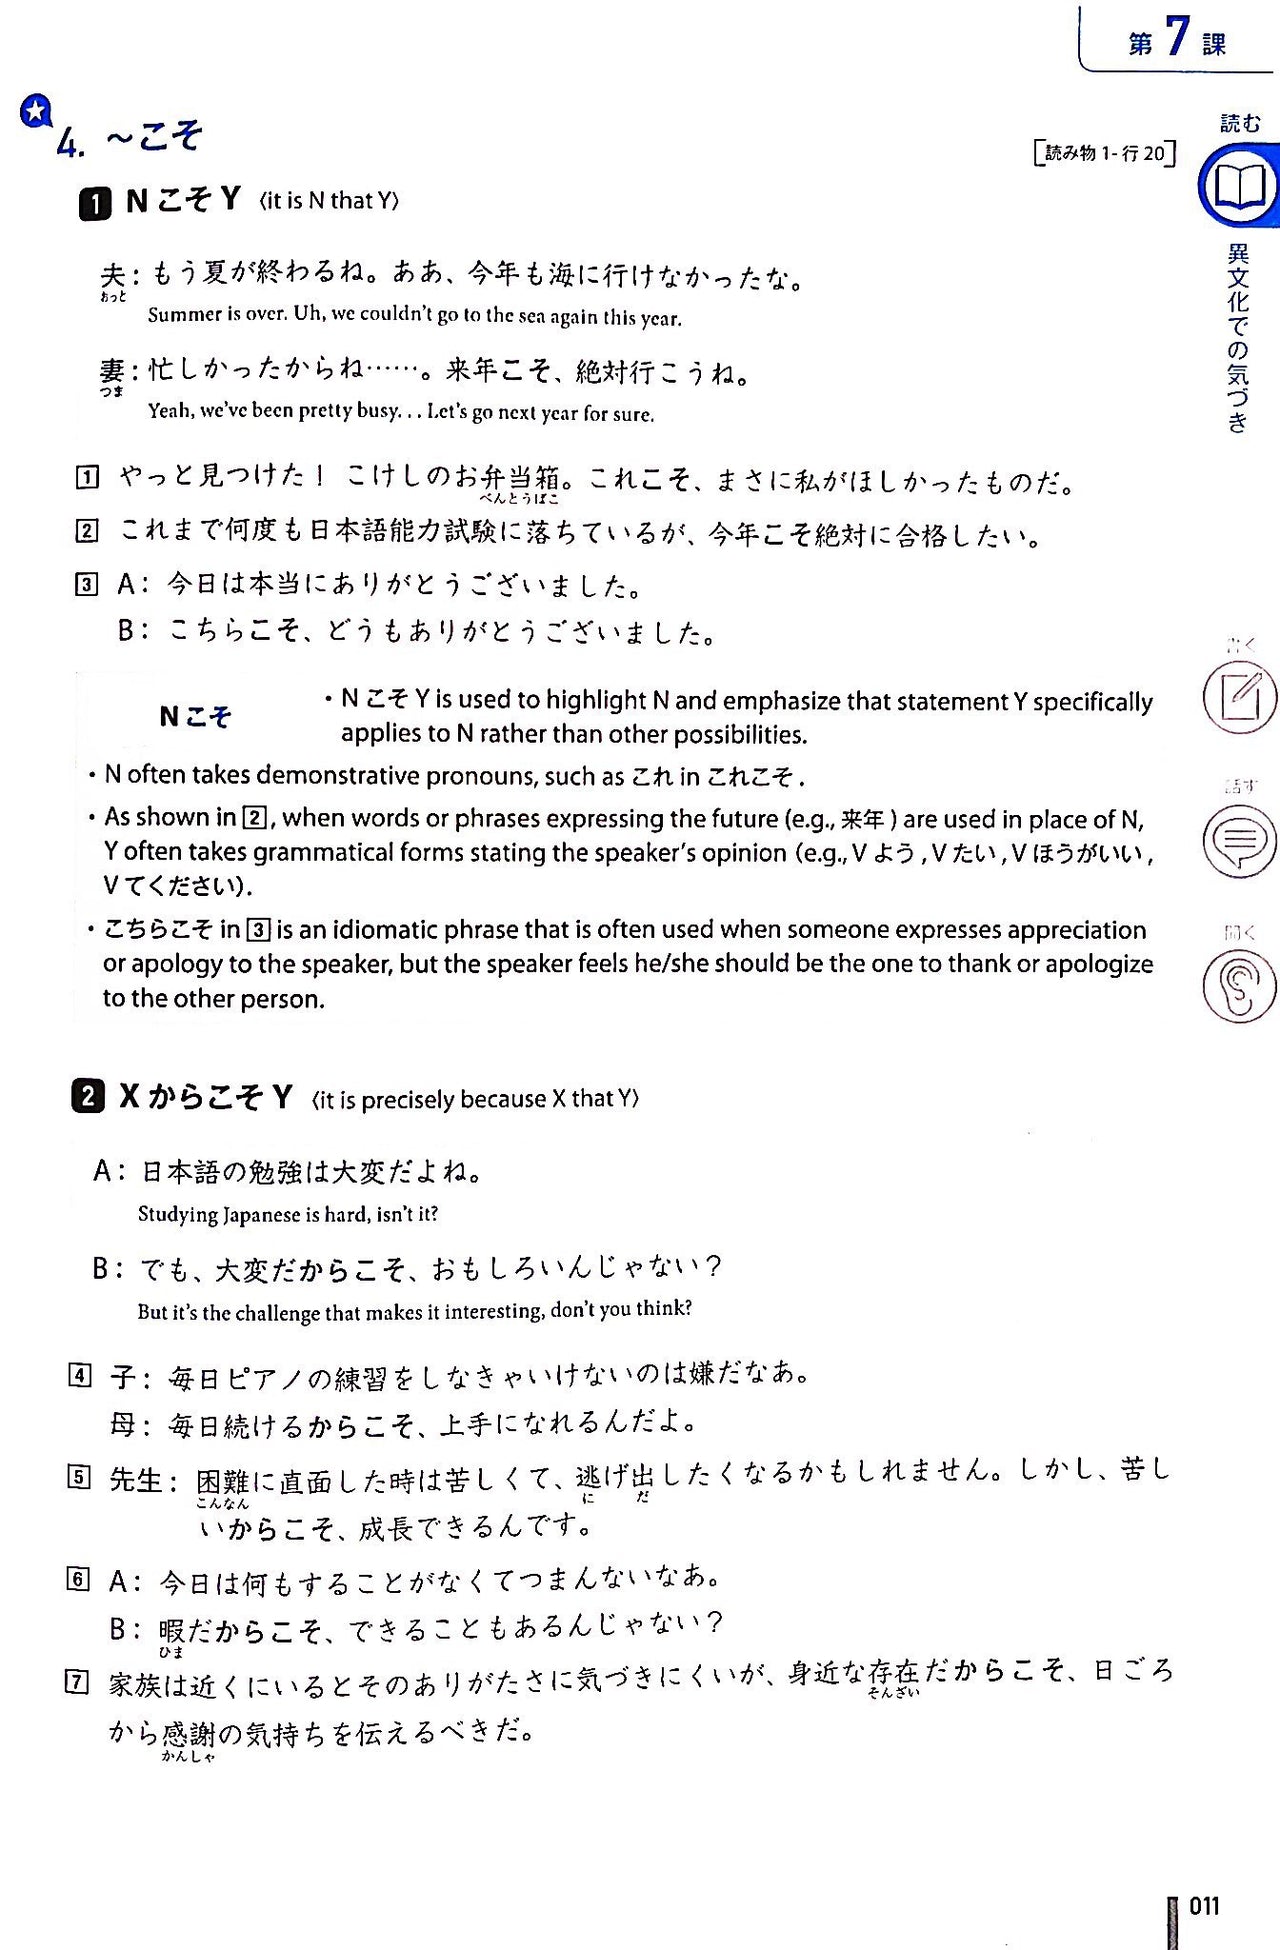 Quartet Vol 2 - Intermediate Japanese Across the Four Language Skills